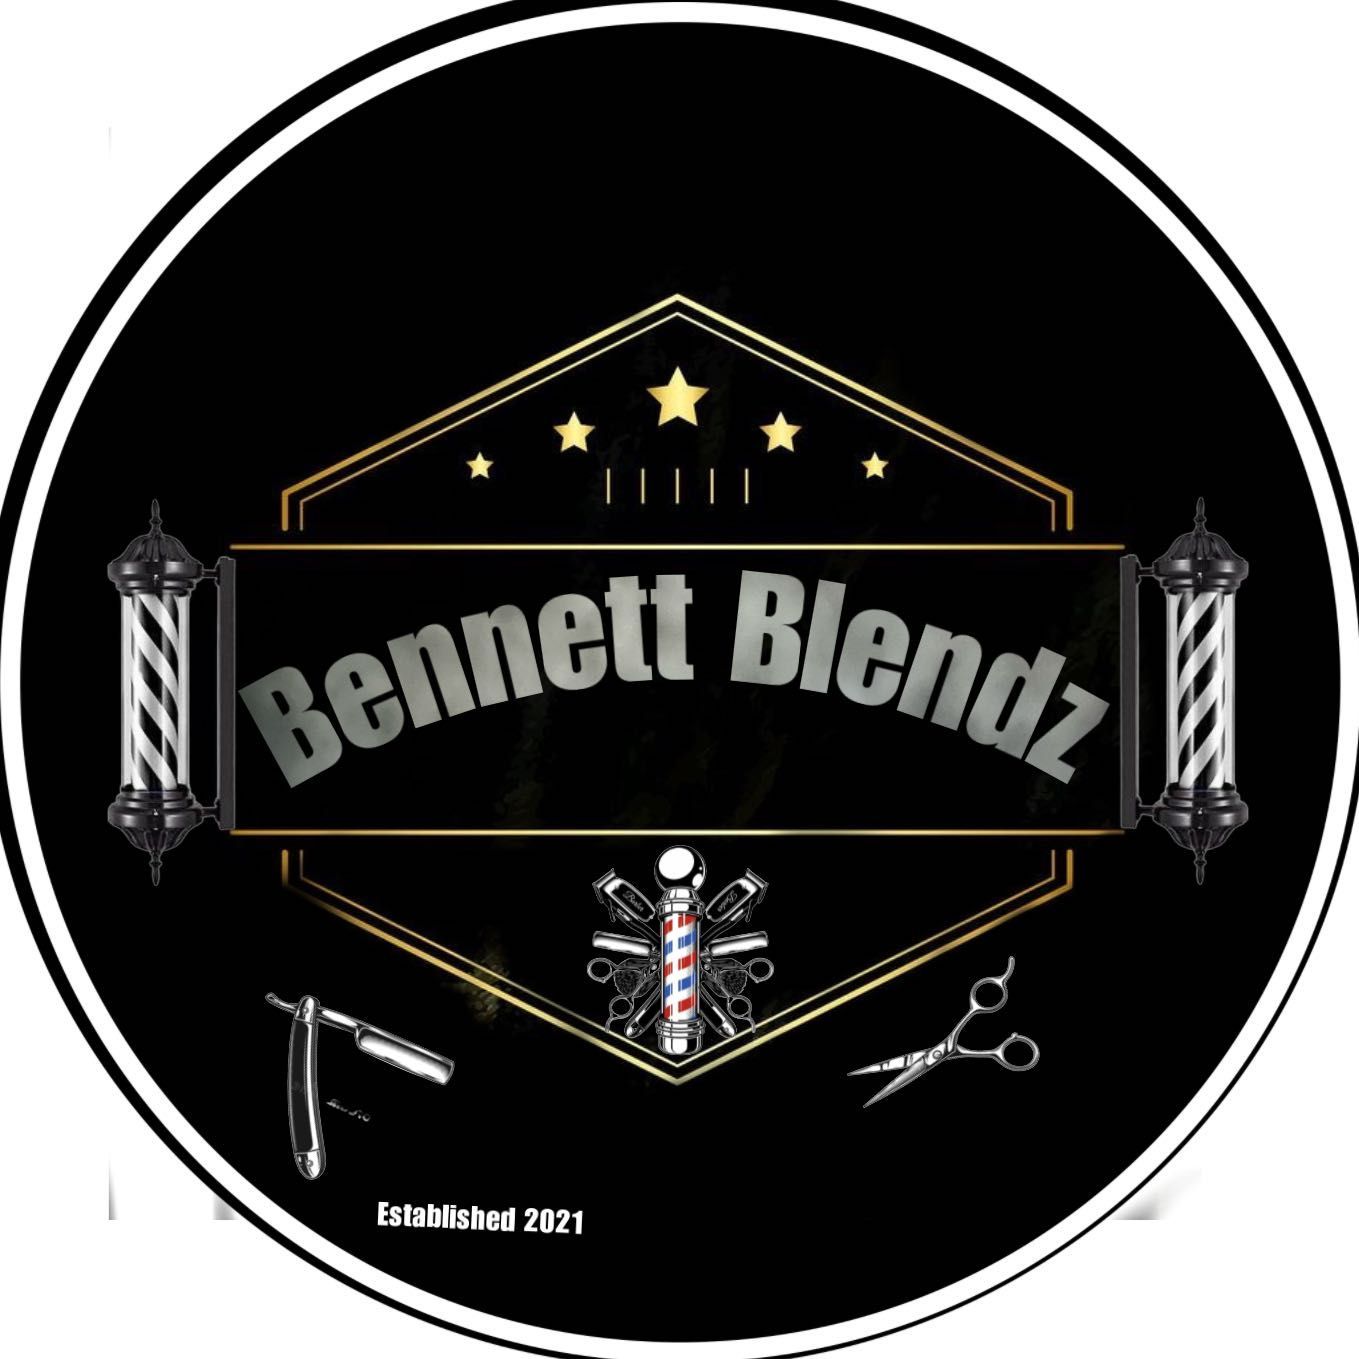 BennettBlendz, 1127 Boston avenue, Nederland, 77627